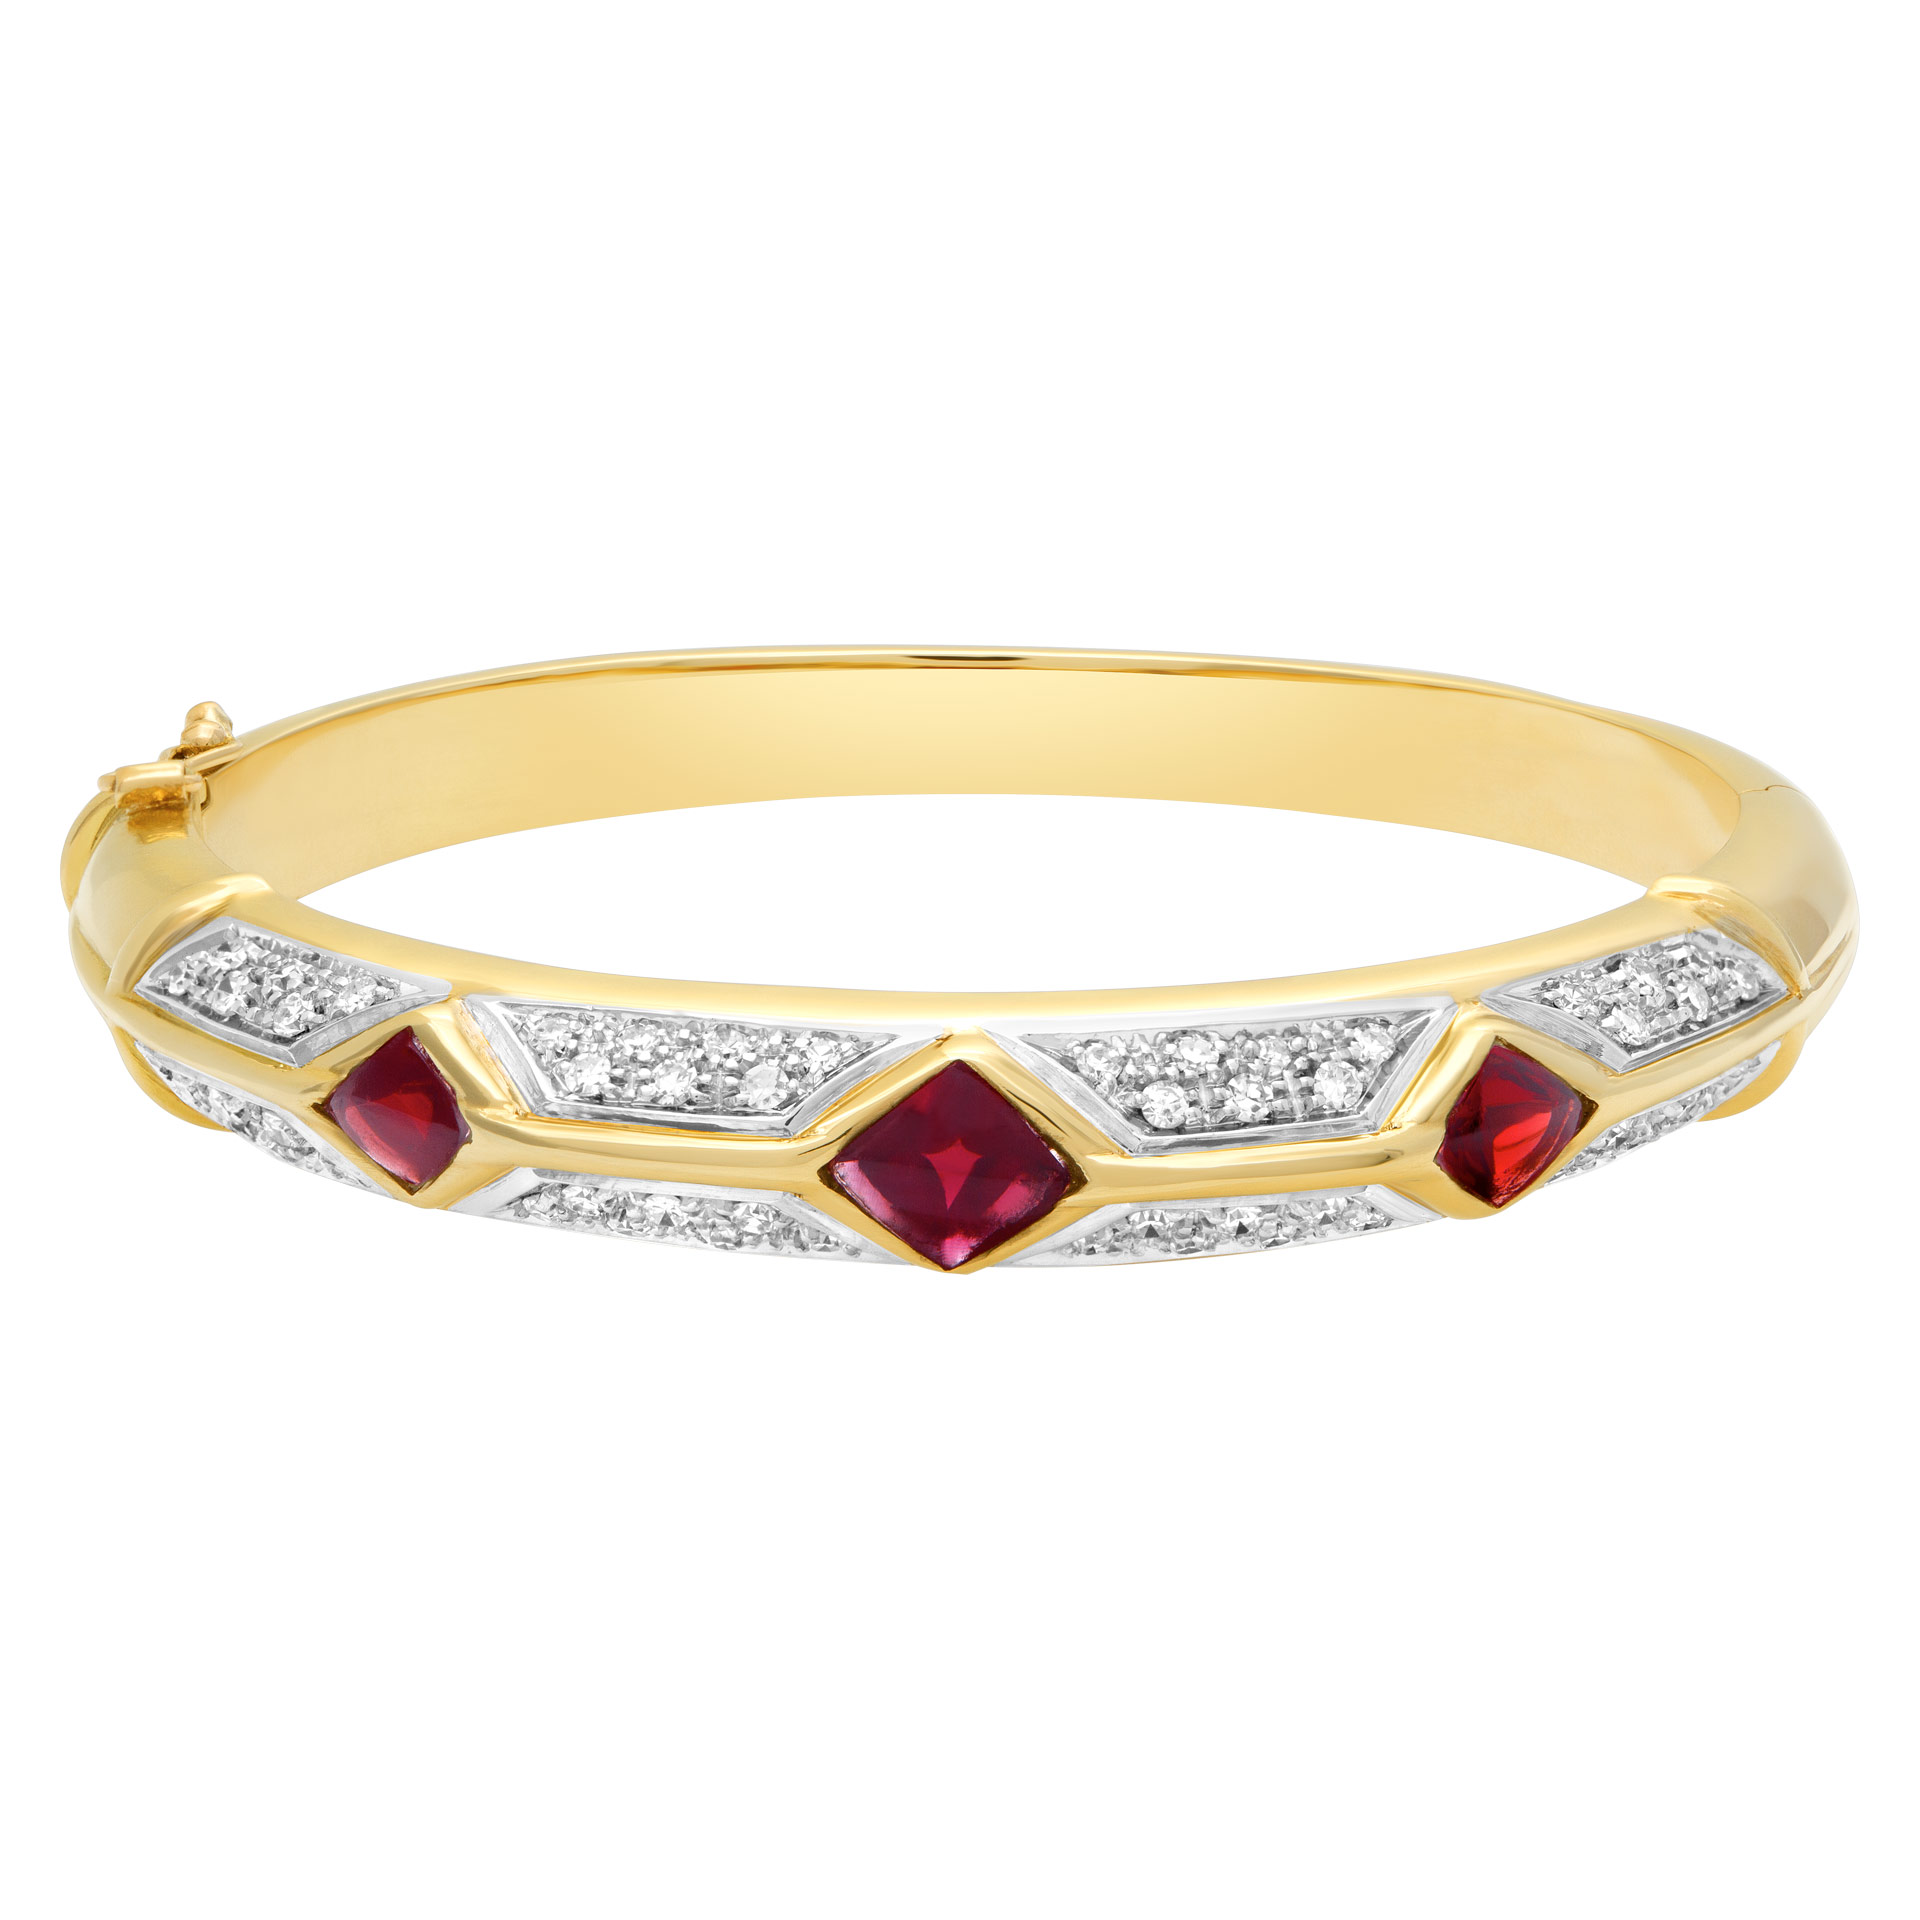 Diamond bangle in 18k with 1 carat in round brilliant cut G-H color, VS clarity diamonds image 1